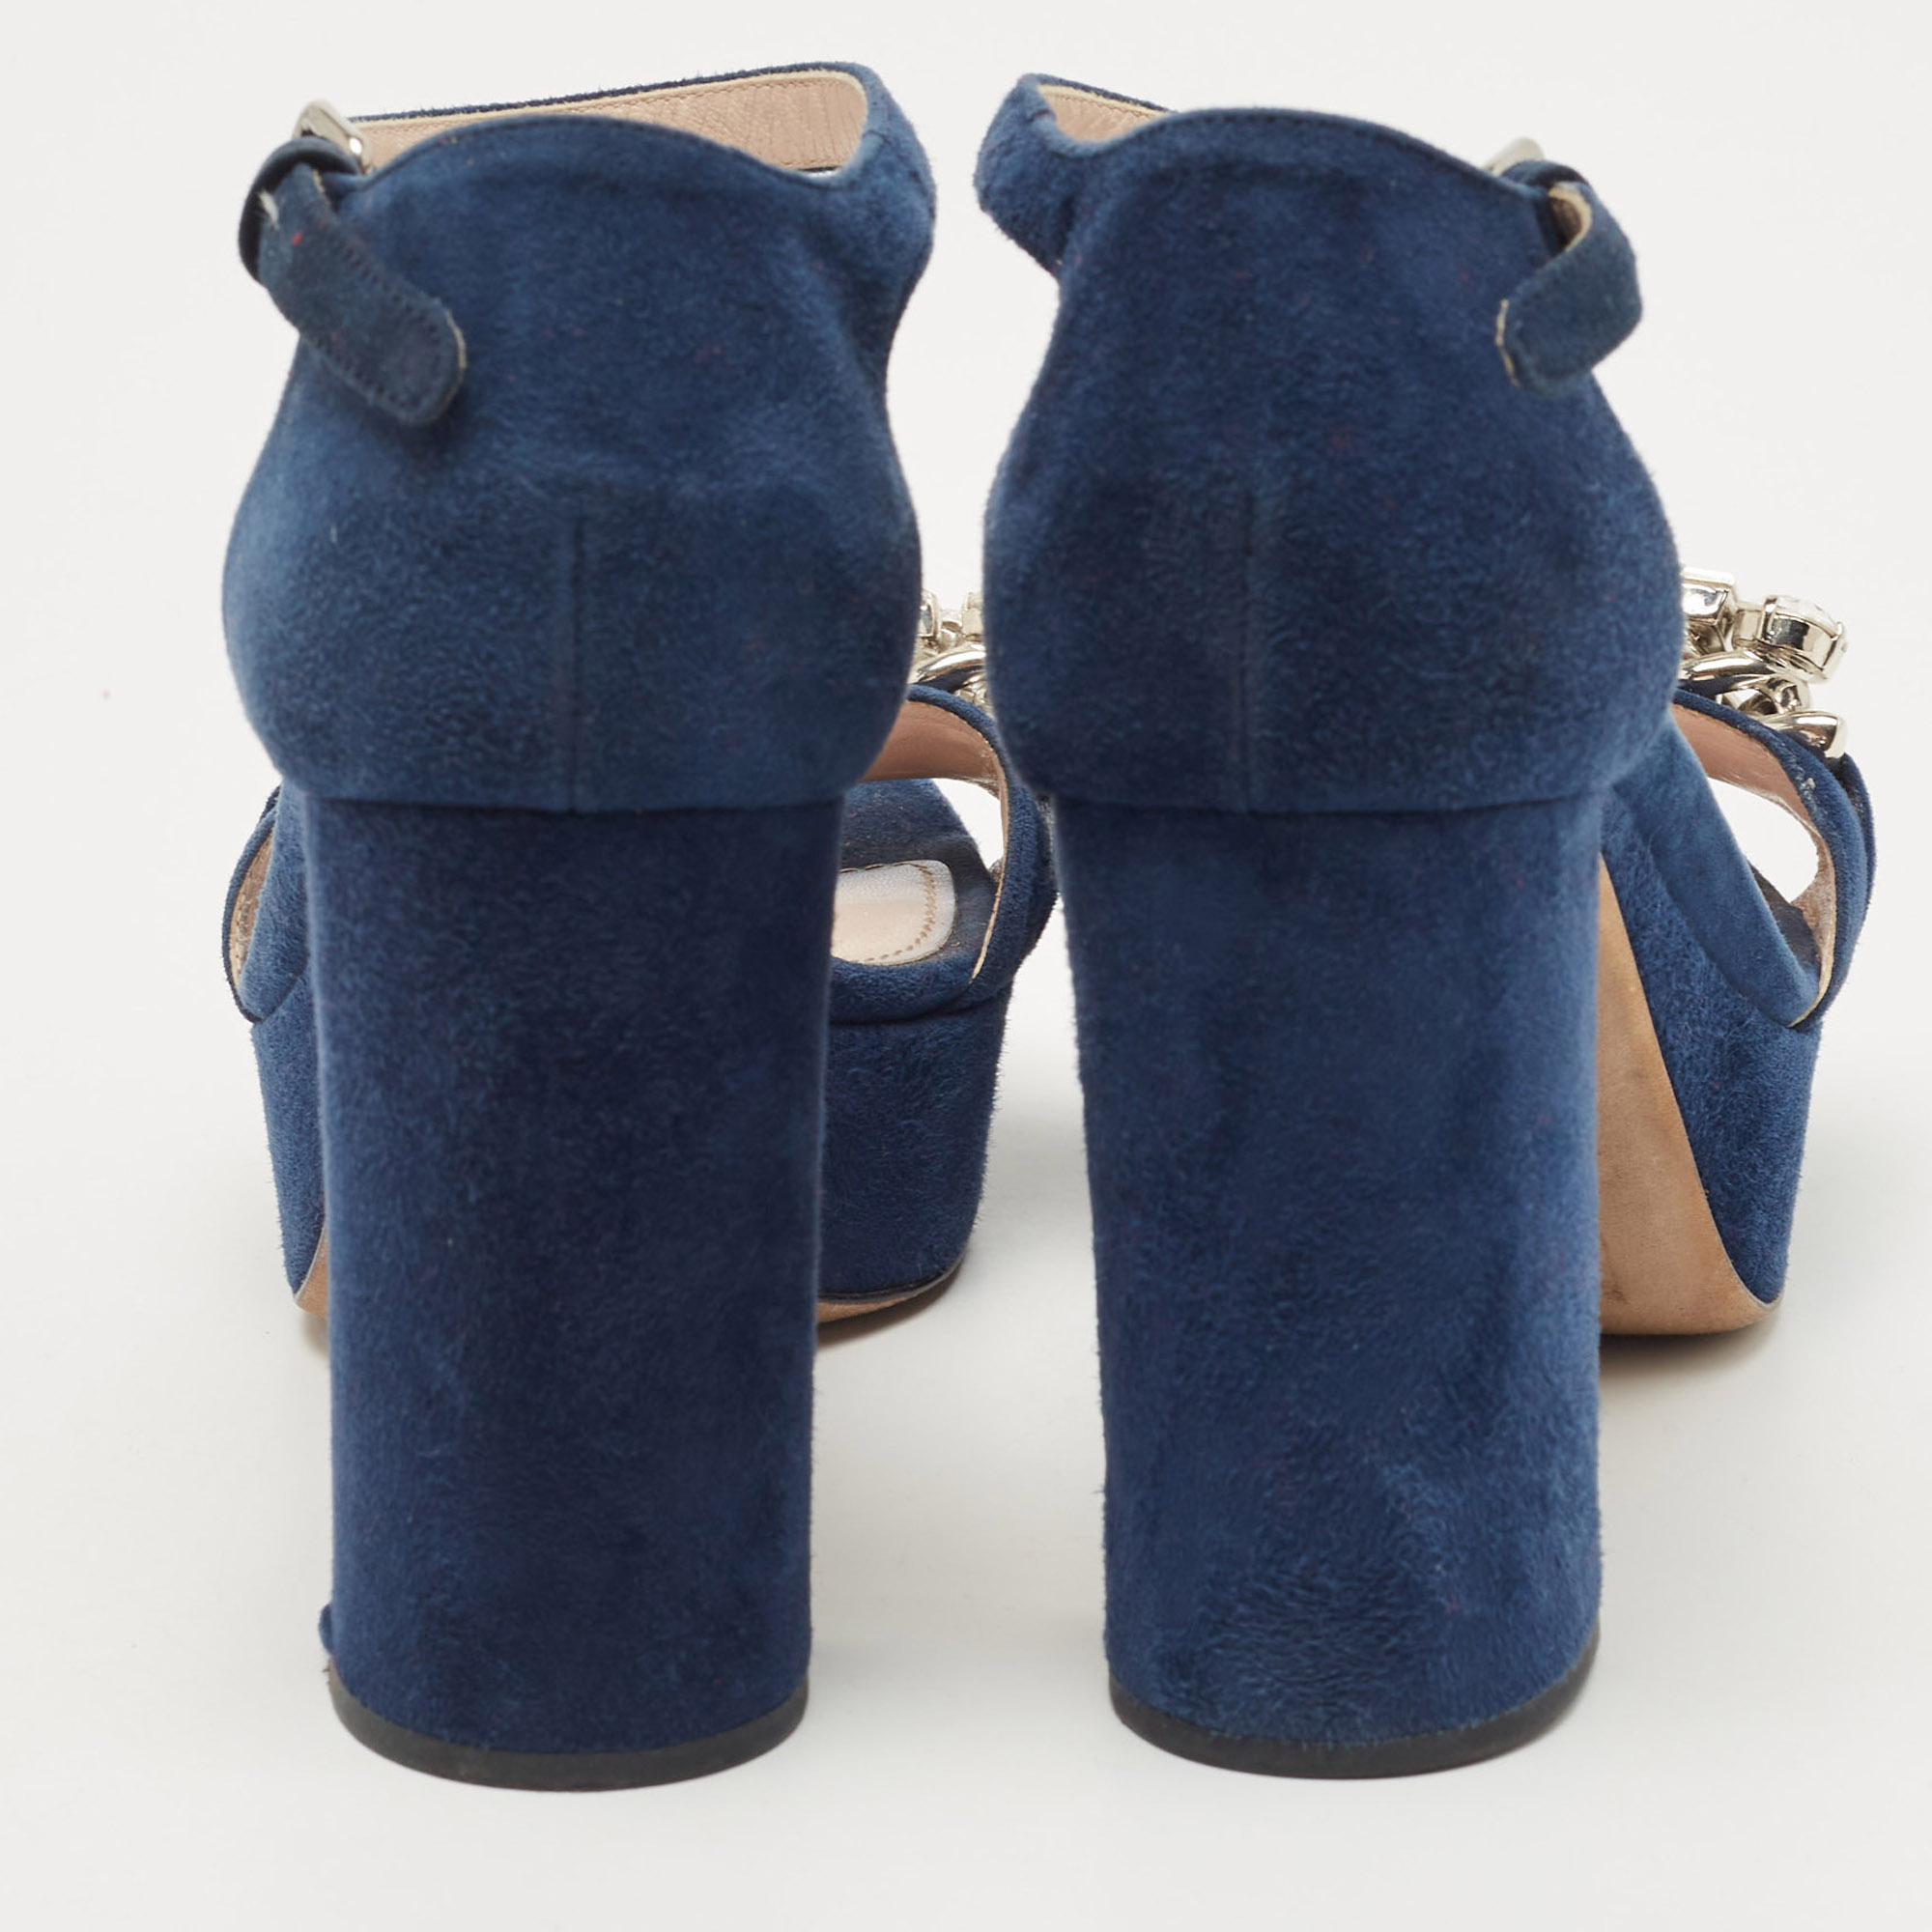 Miu Miu Navy Blue Suede Crystal Embellished Ankle Strap Sandals Size 37.5